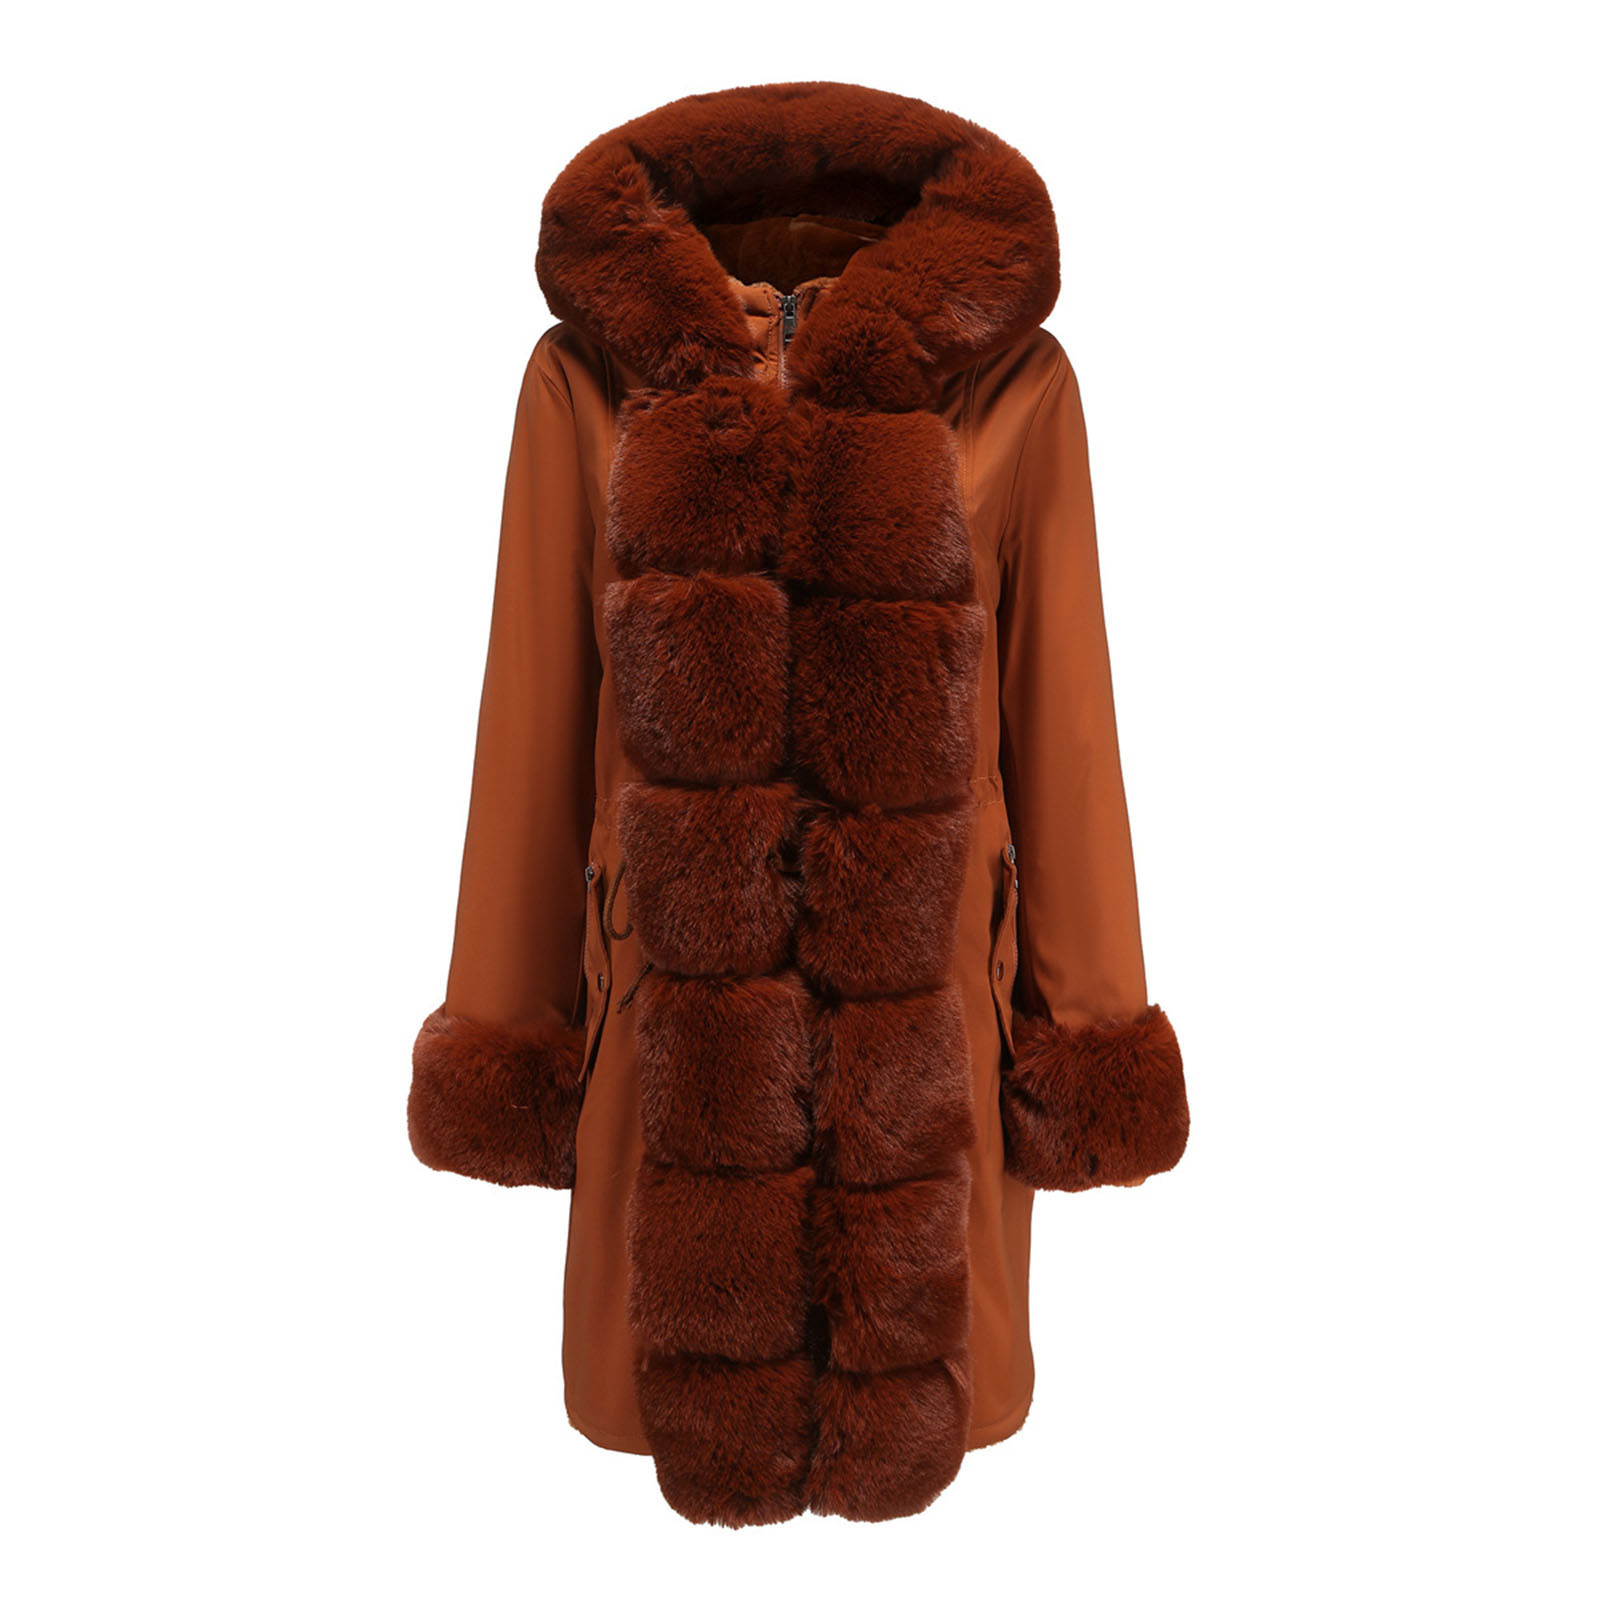 YFPWM Jacket for Women Winter Wrap Cape Coat Fleece Open Front Coat With Pockets Double Sided Winter Coat Light Jacket Casual Slim Fit Jacket Short Blouse - image 1 of 6